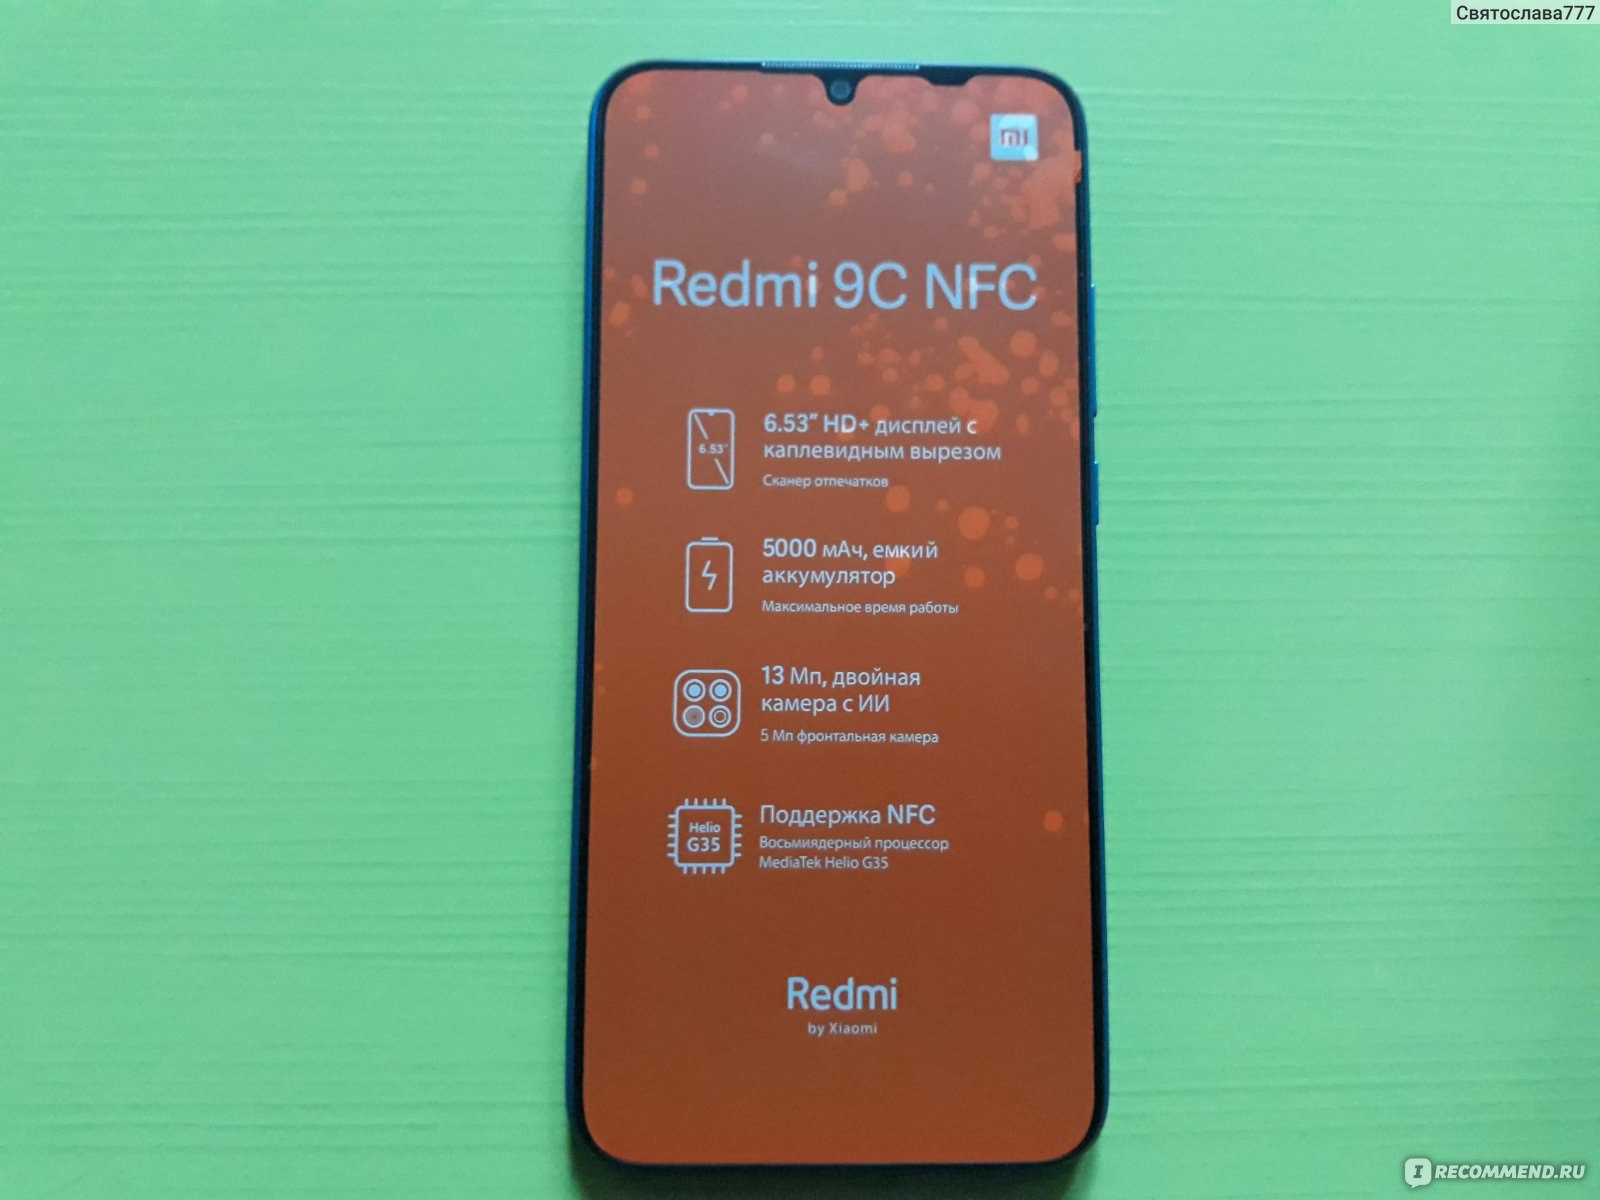 Redmi 9c nfc 32. Телефон Redmi 9c NFC. Xiaomi Redmi 9c NFC 64gb. Redmi 9c NFC 64 ГБ. Xiaomi Redmi 9c NFC 4/64 ГБ.